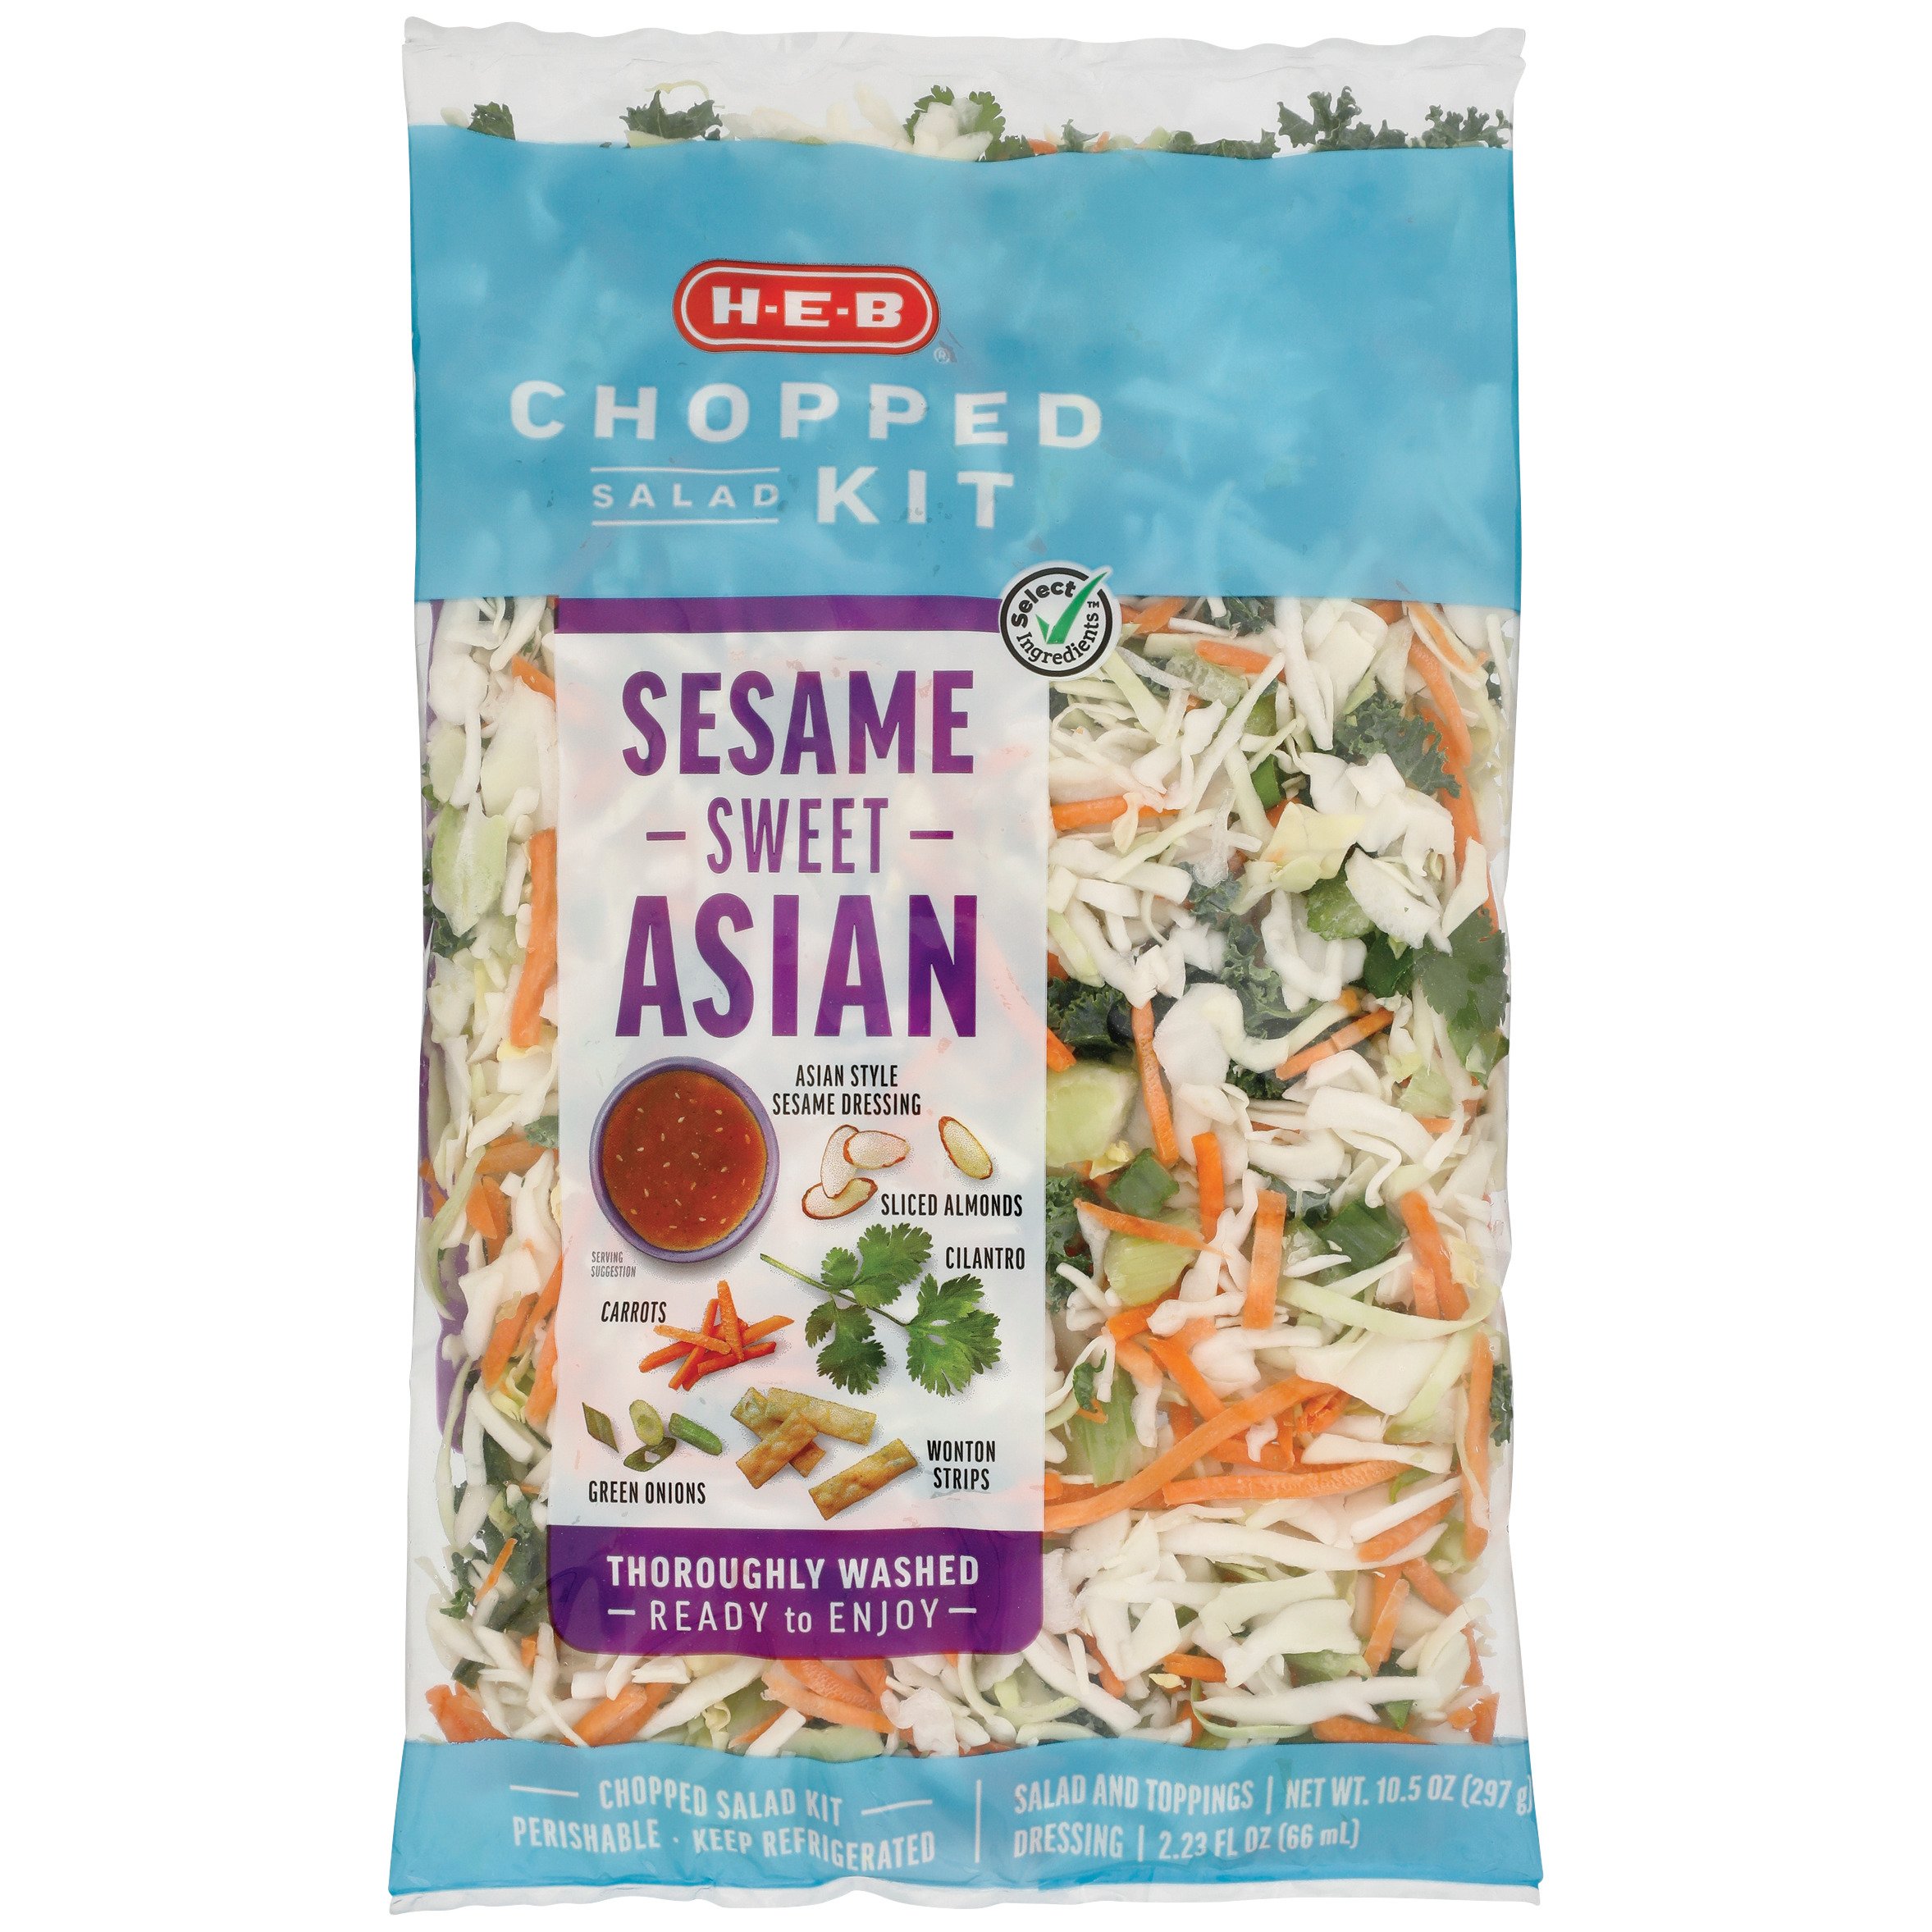 H-E-B Chopped Salad Kit - Sesame Sweet Asian - Shop Salads at